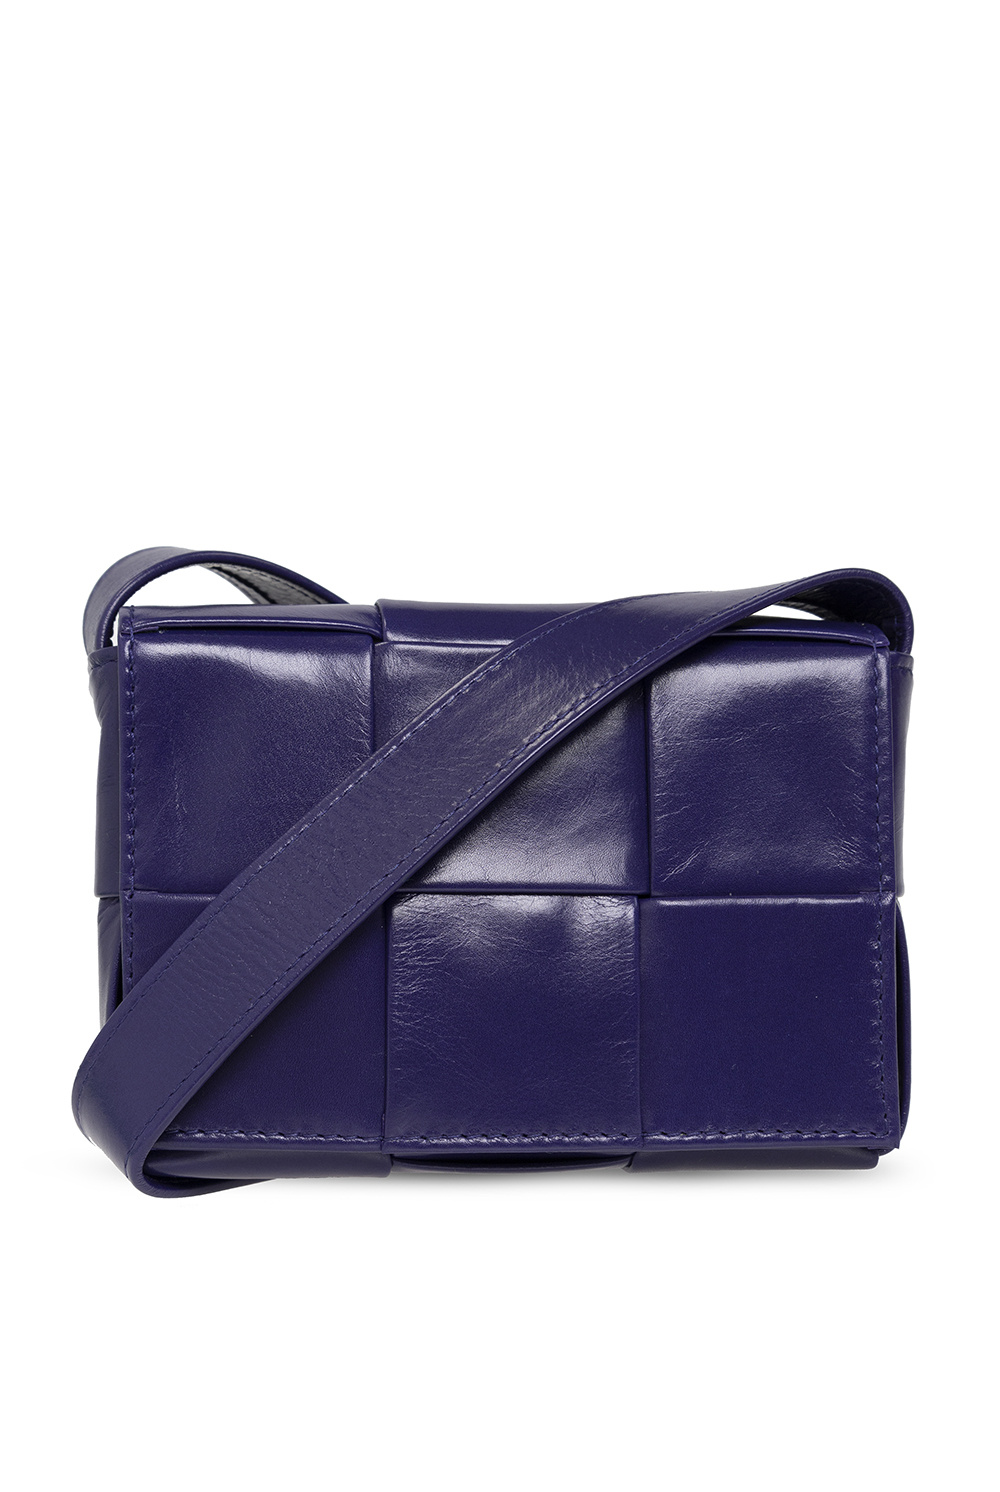 bottega mesh Veneta ‘Casette Mini’ shoulder bag